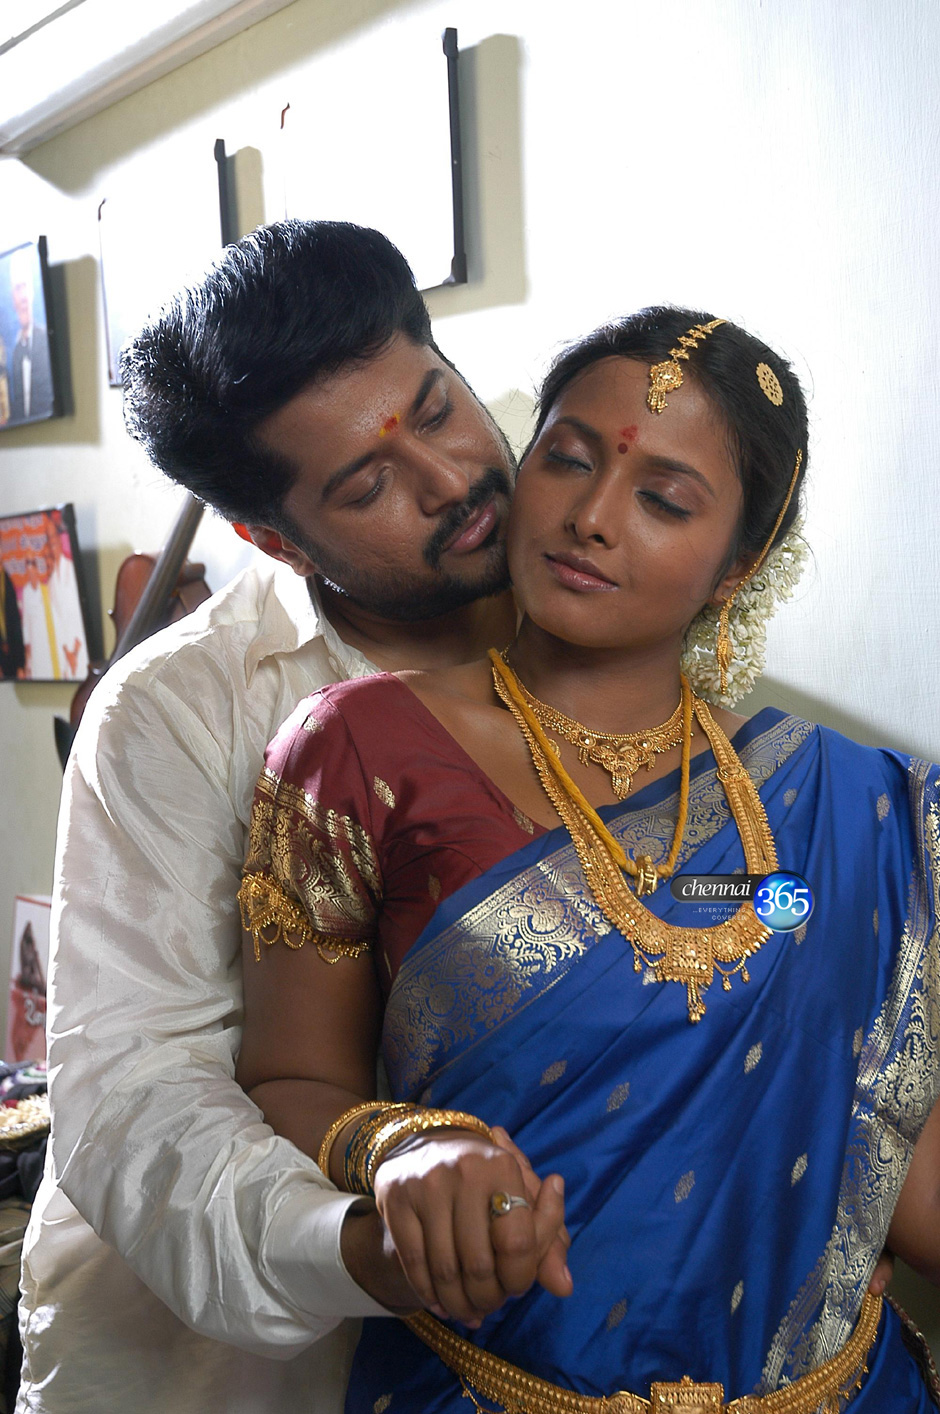 Meesaya Murukku Movie Stills | Chennai365